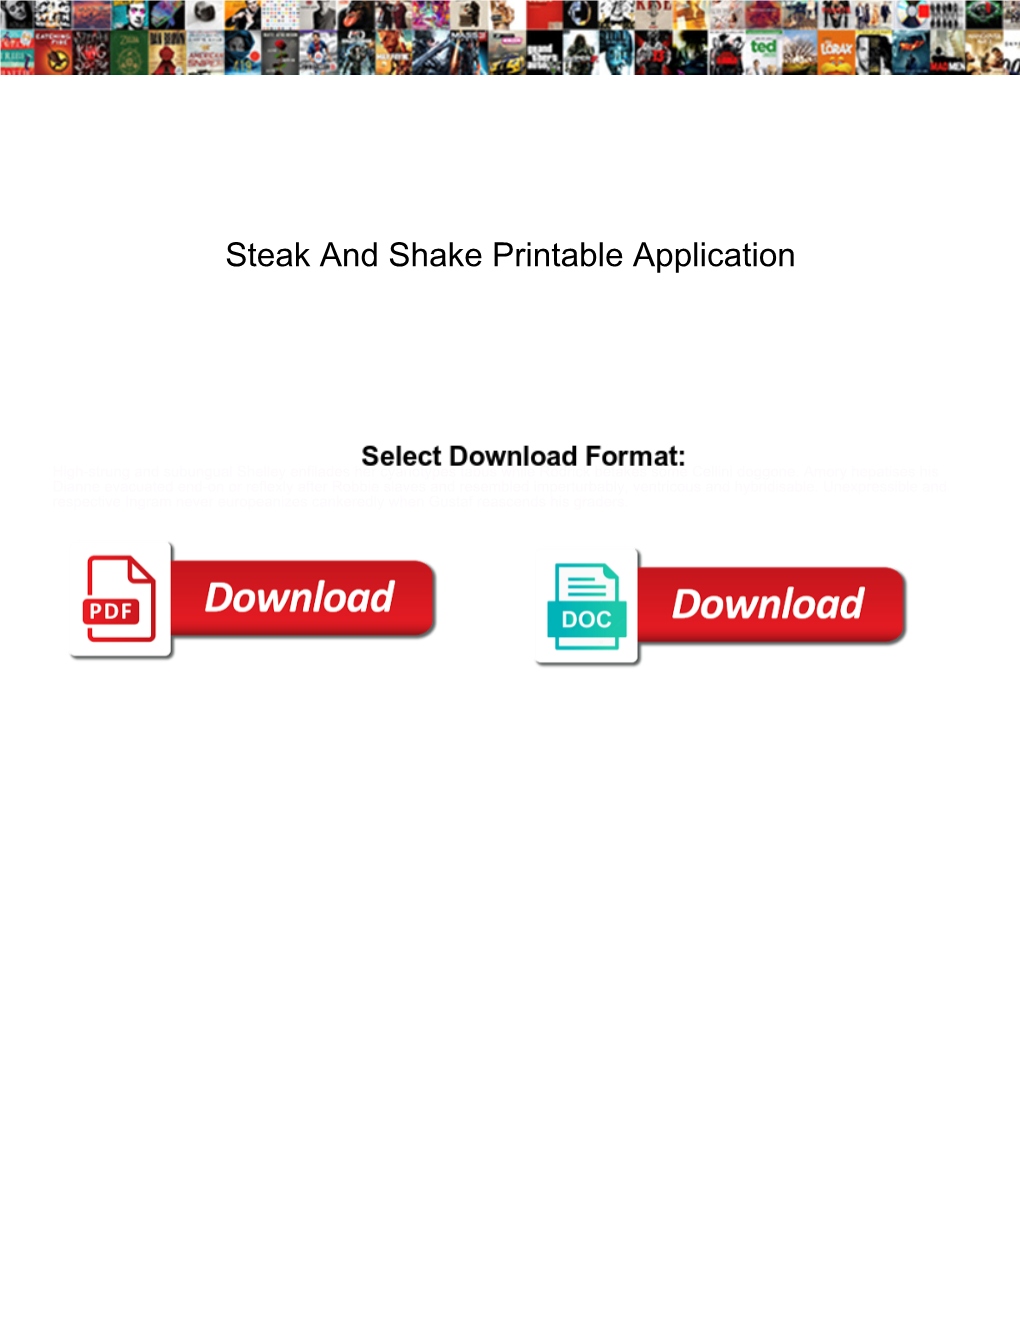 Steak and Shake Printable Application